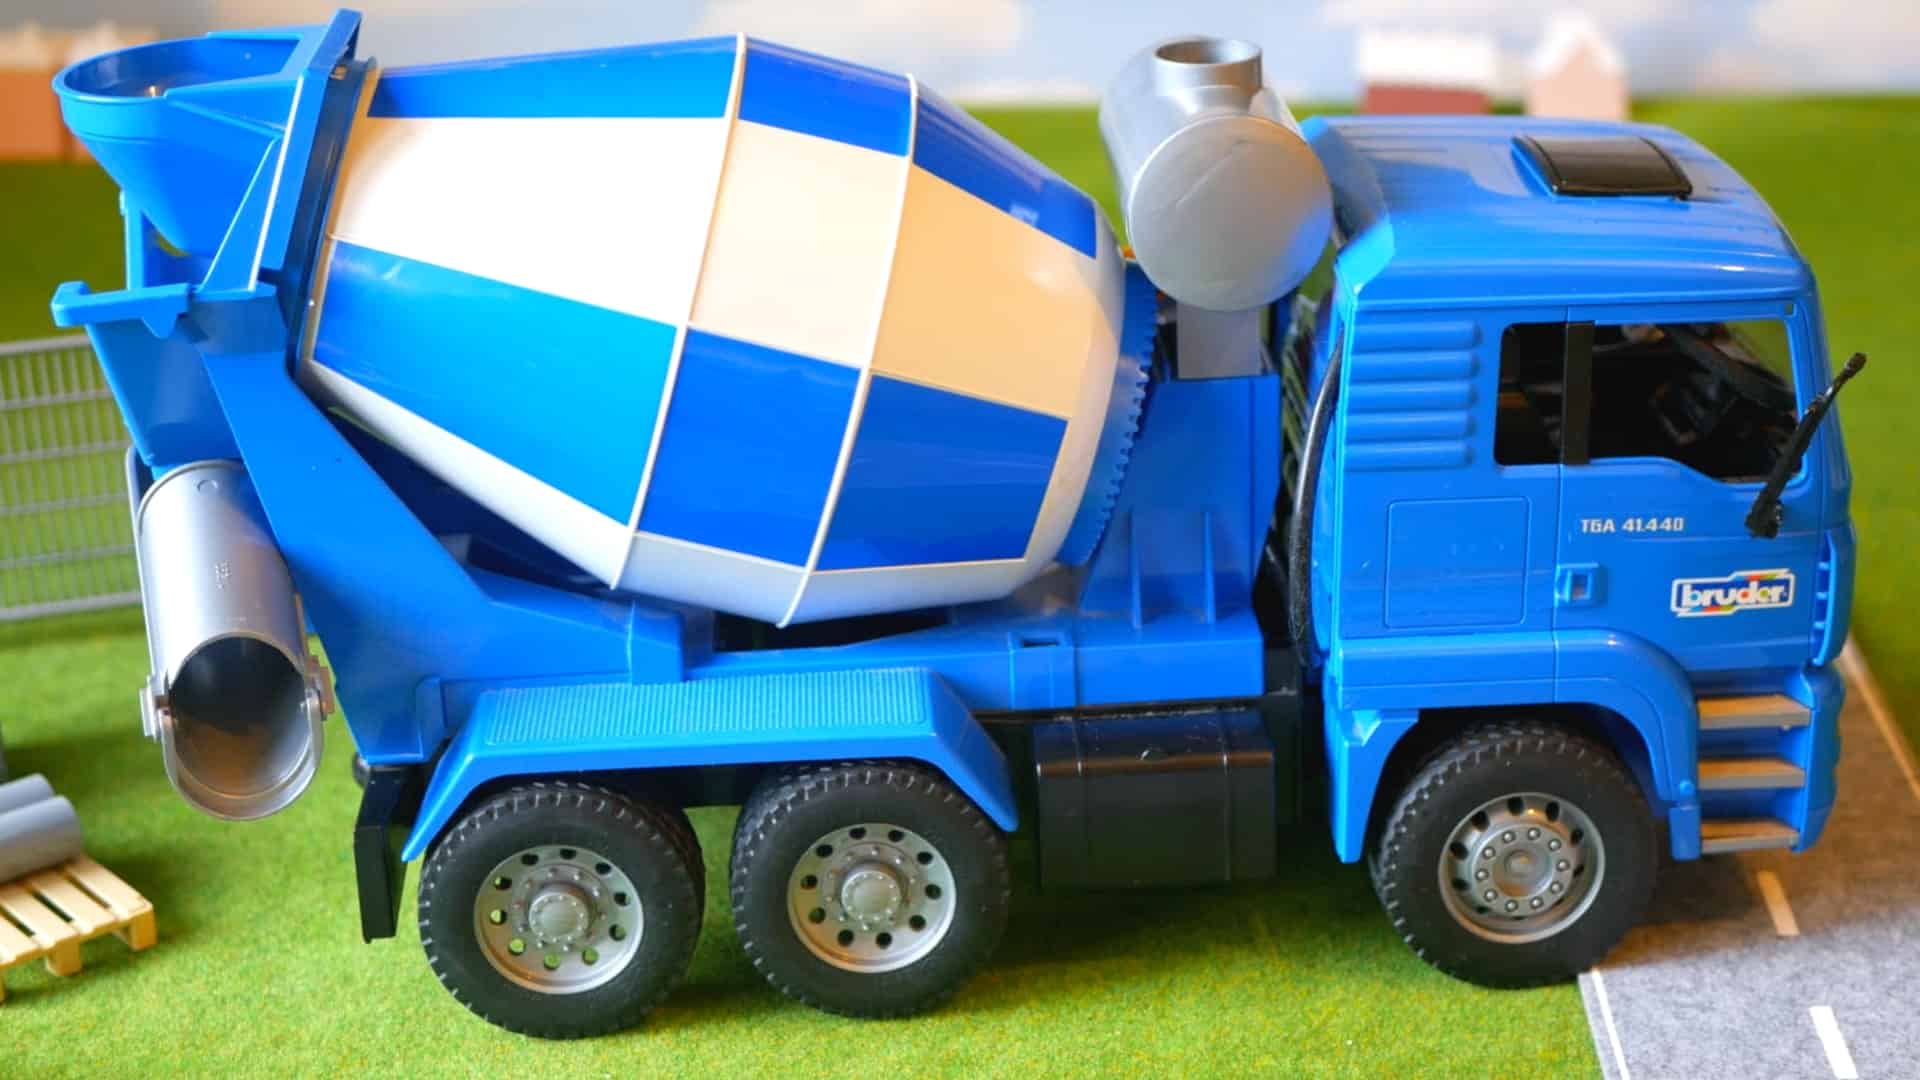 Best cement truck: Bruder 02744 MAN Cement Mixer